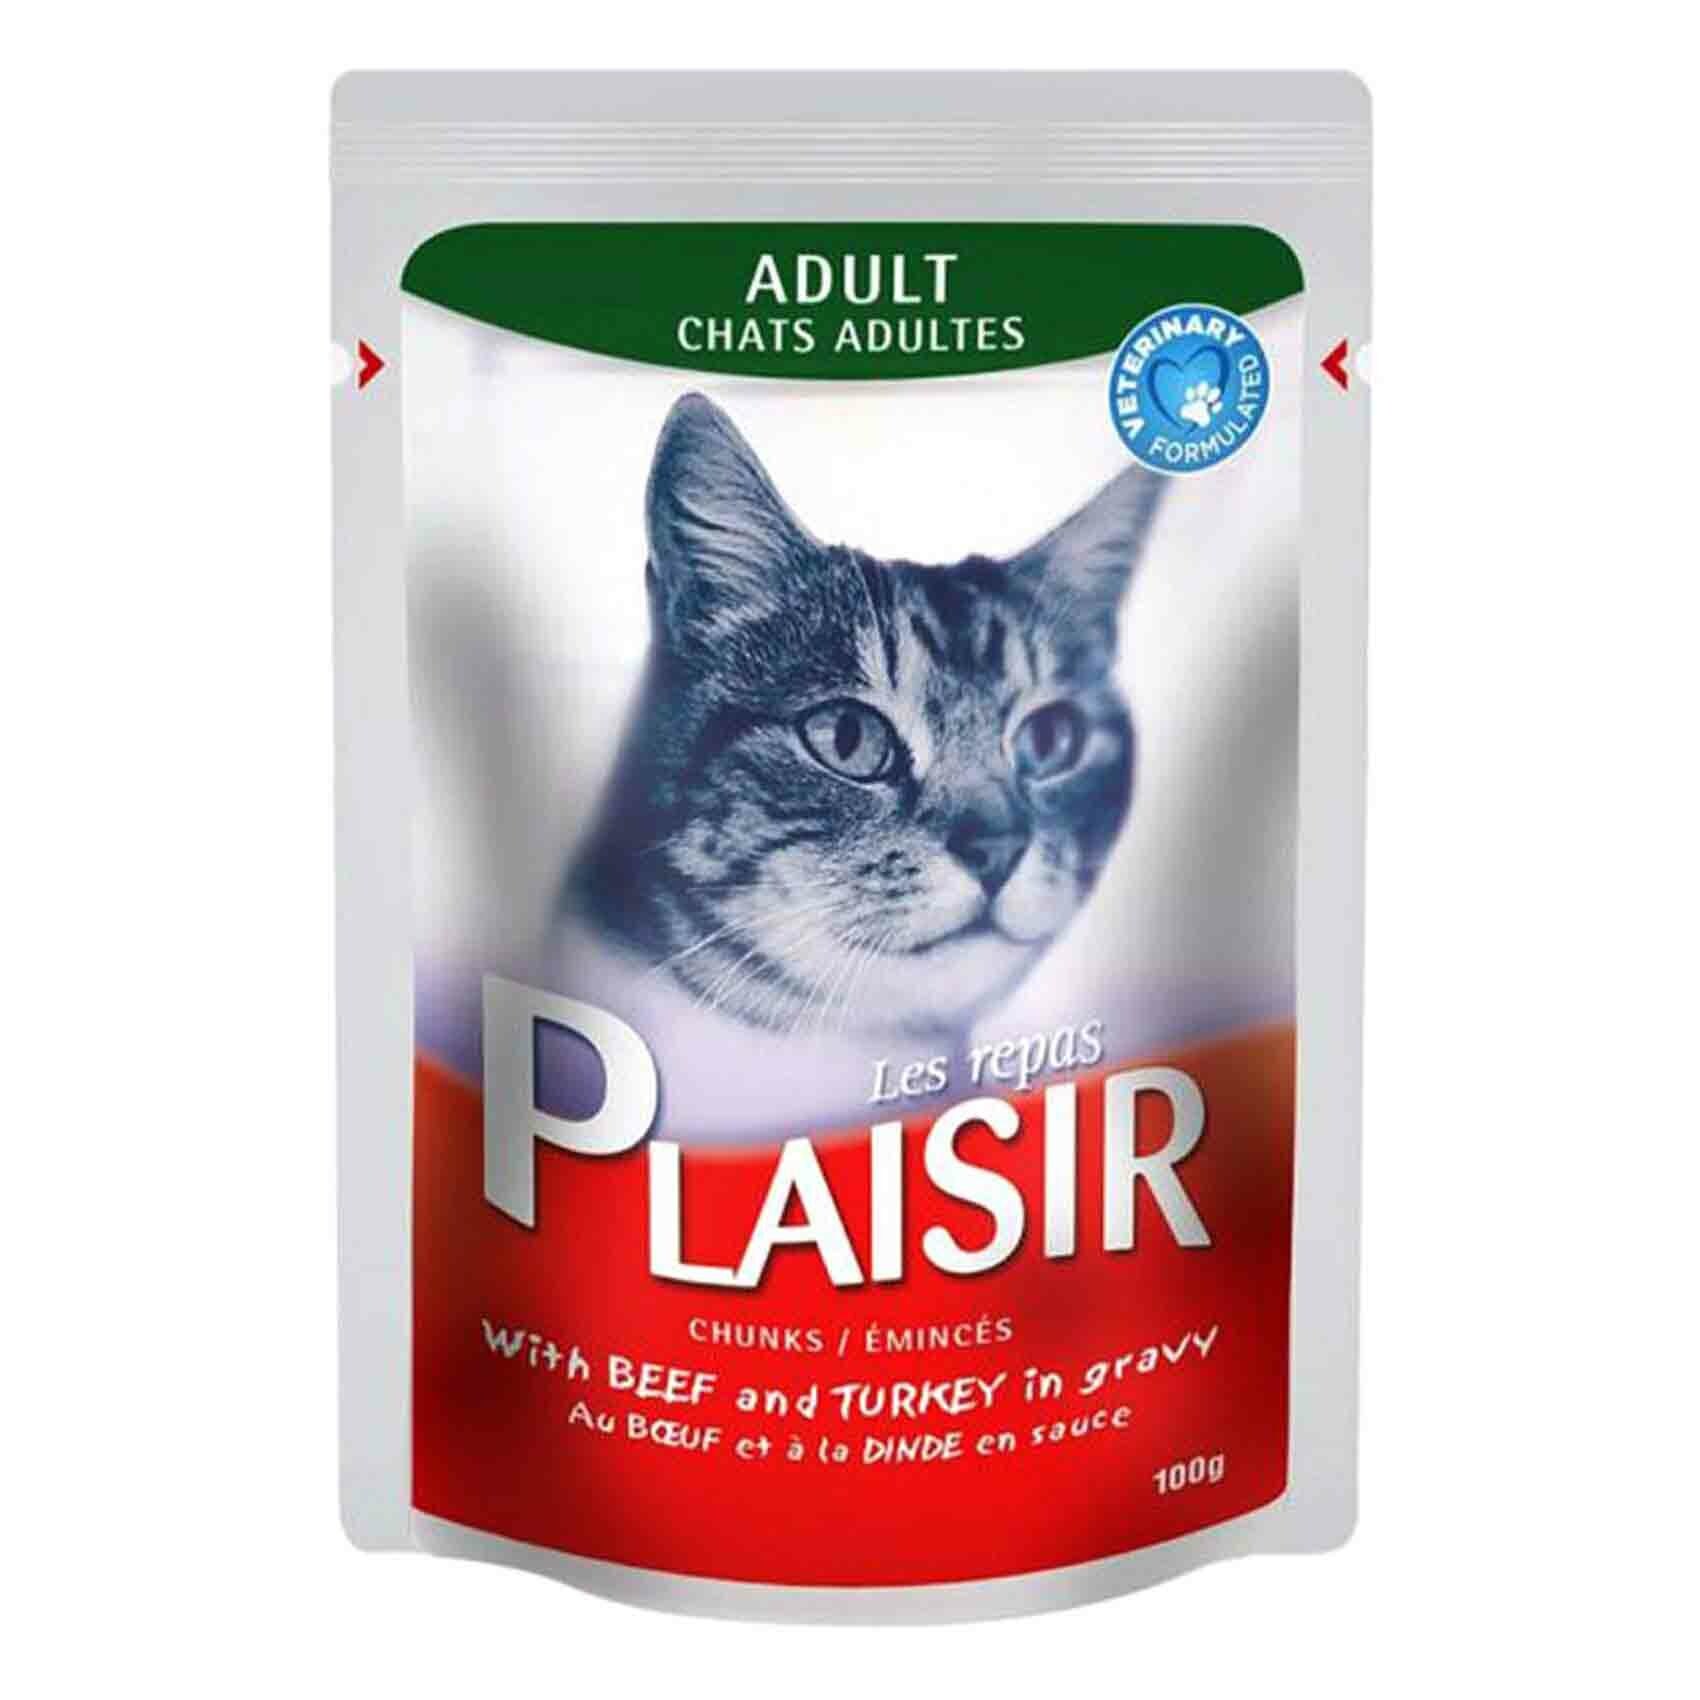 Buy Plaisir Cats Beef Turkey 100g Online Shop On Carrefour Uae